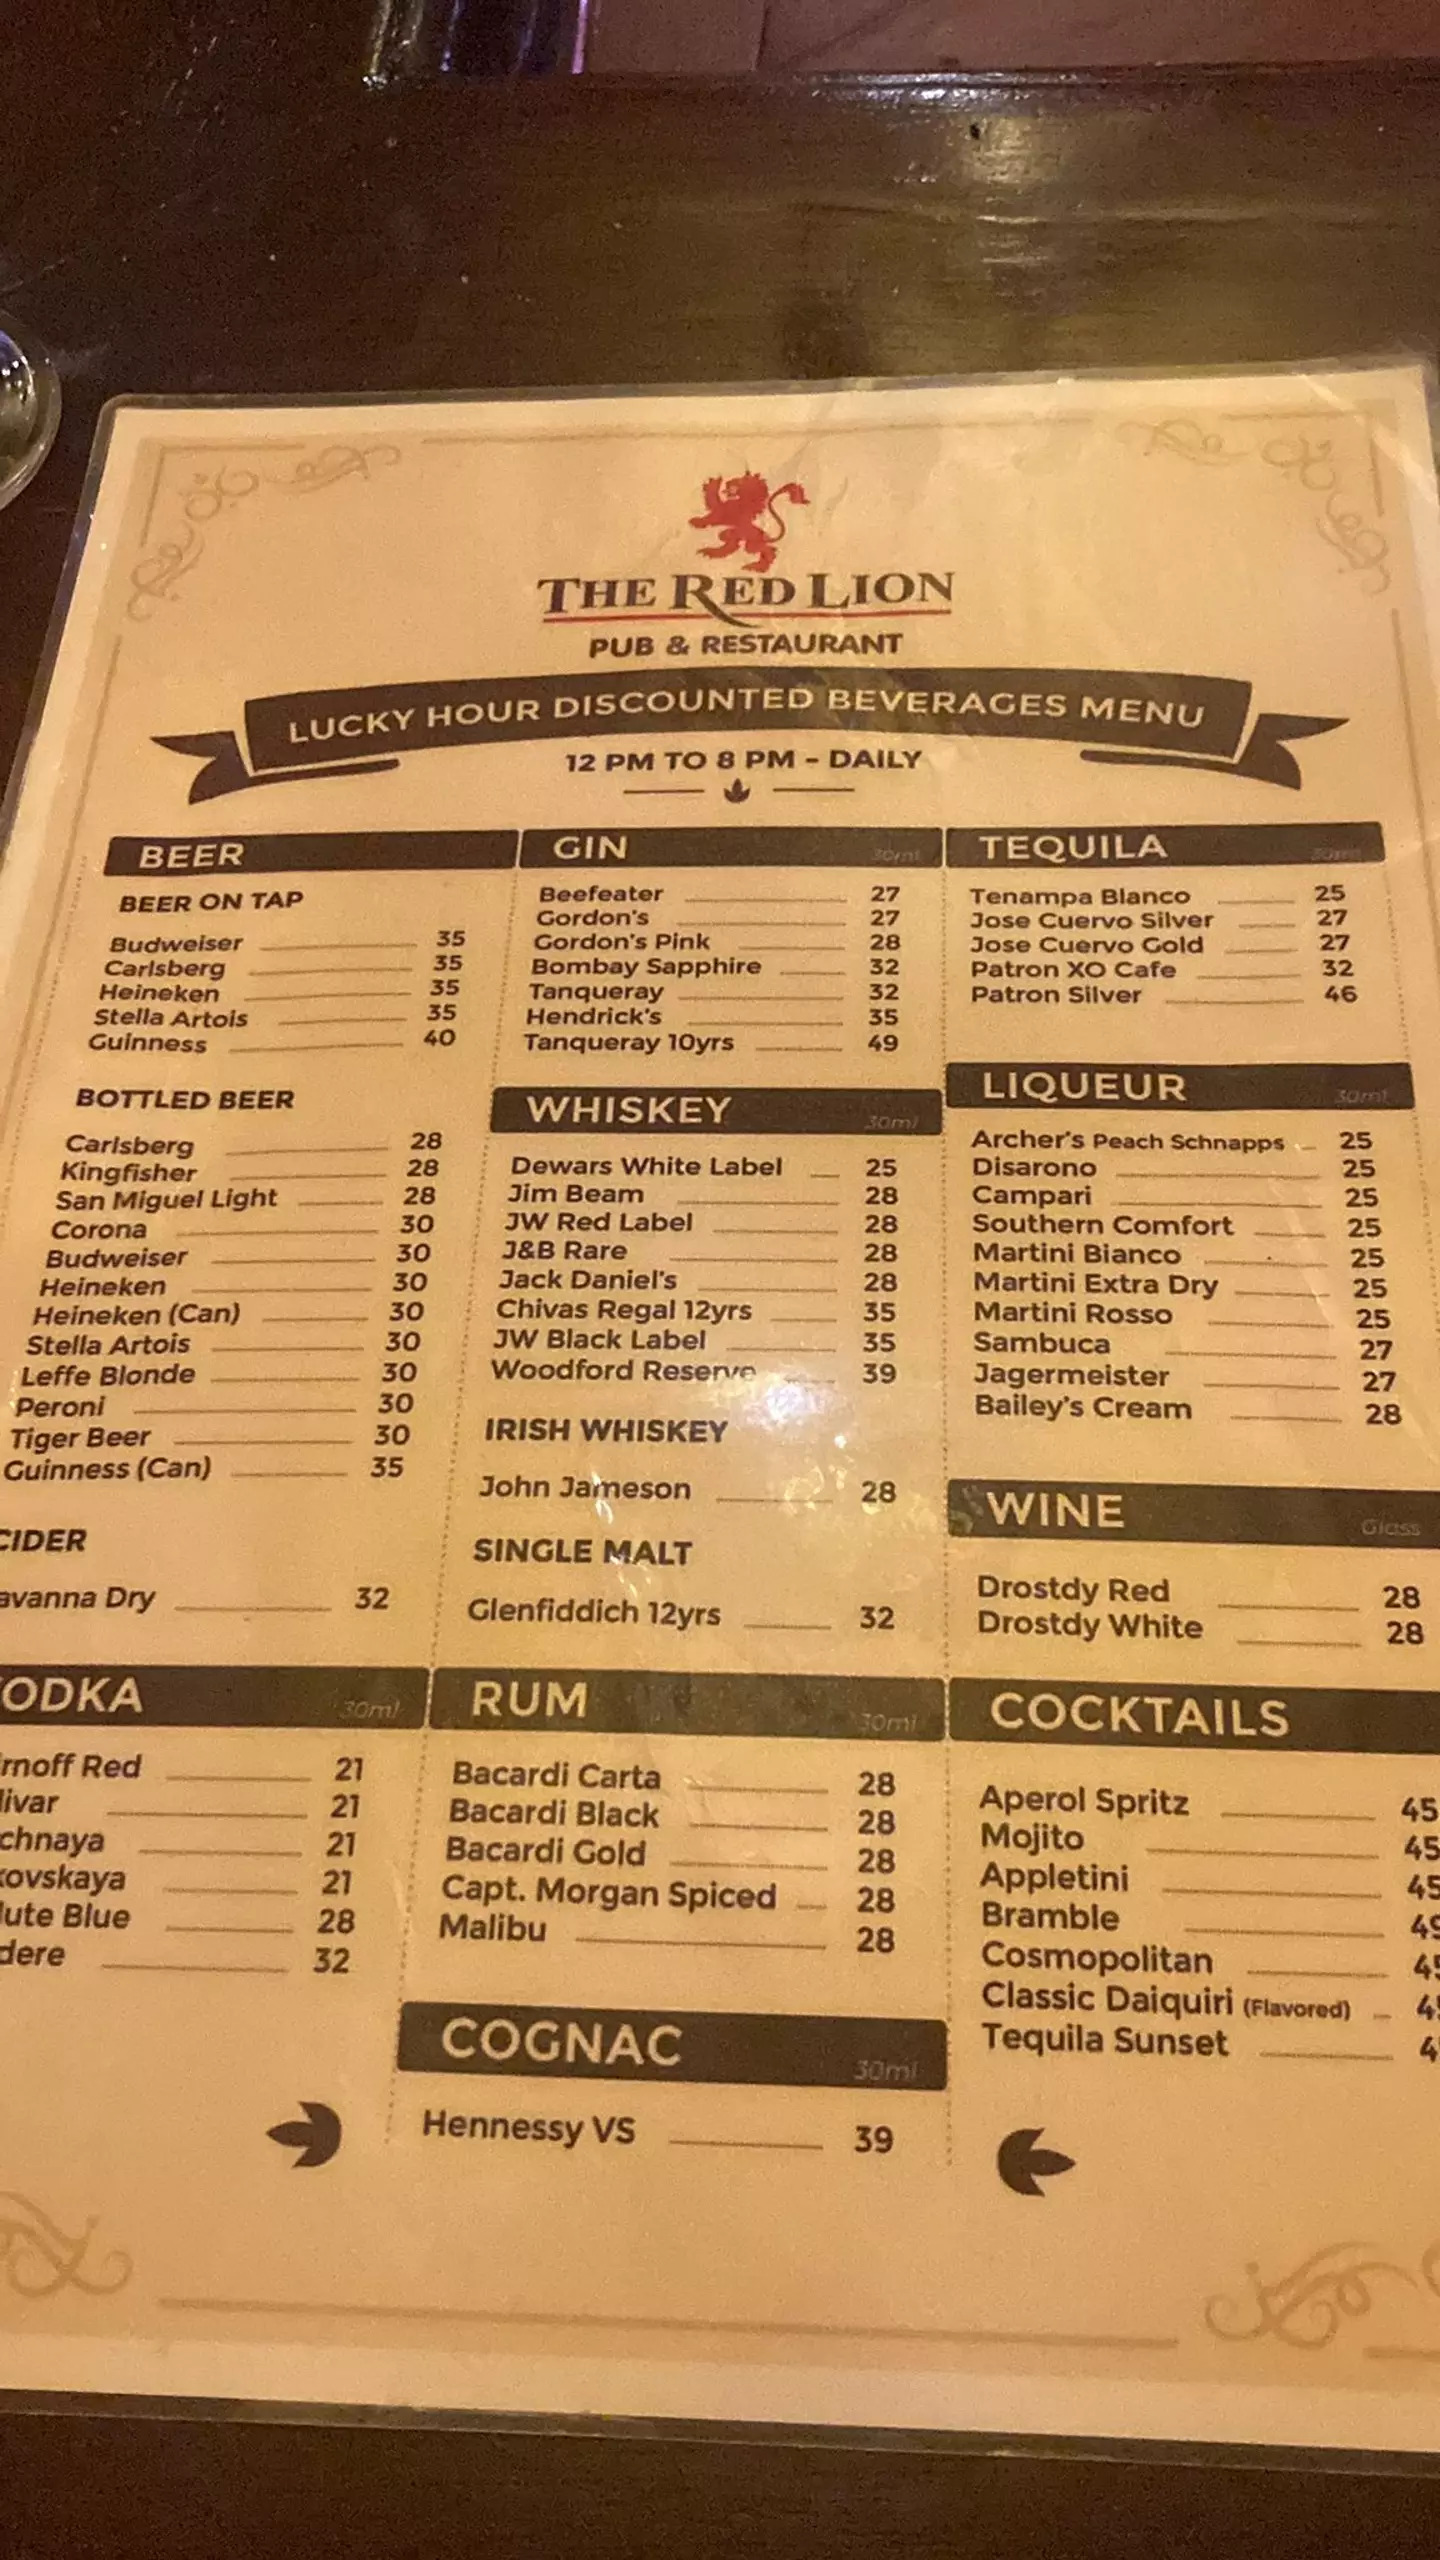 The menu prices are surprisingly decent.